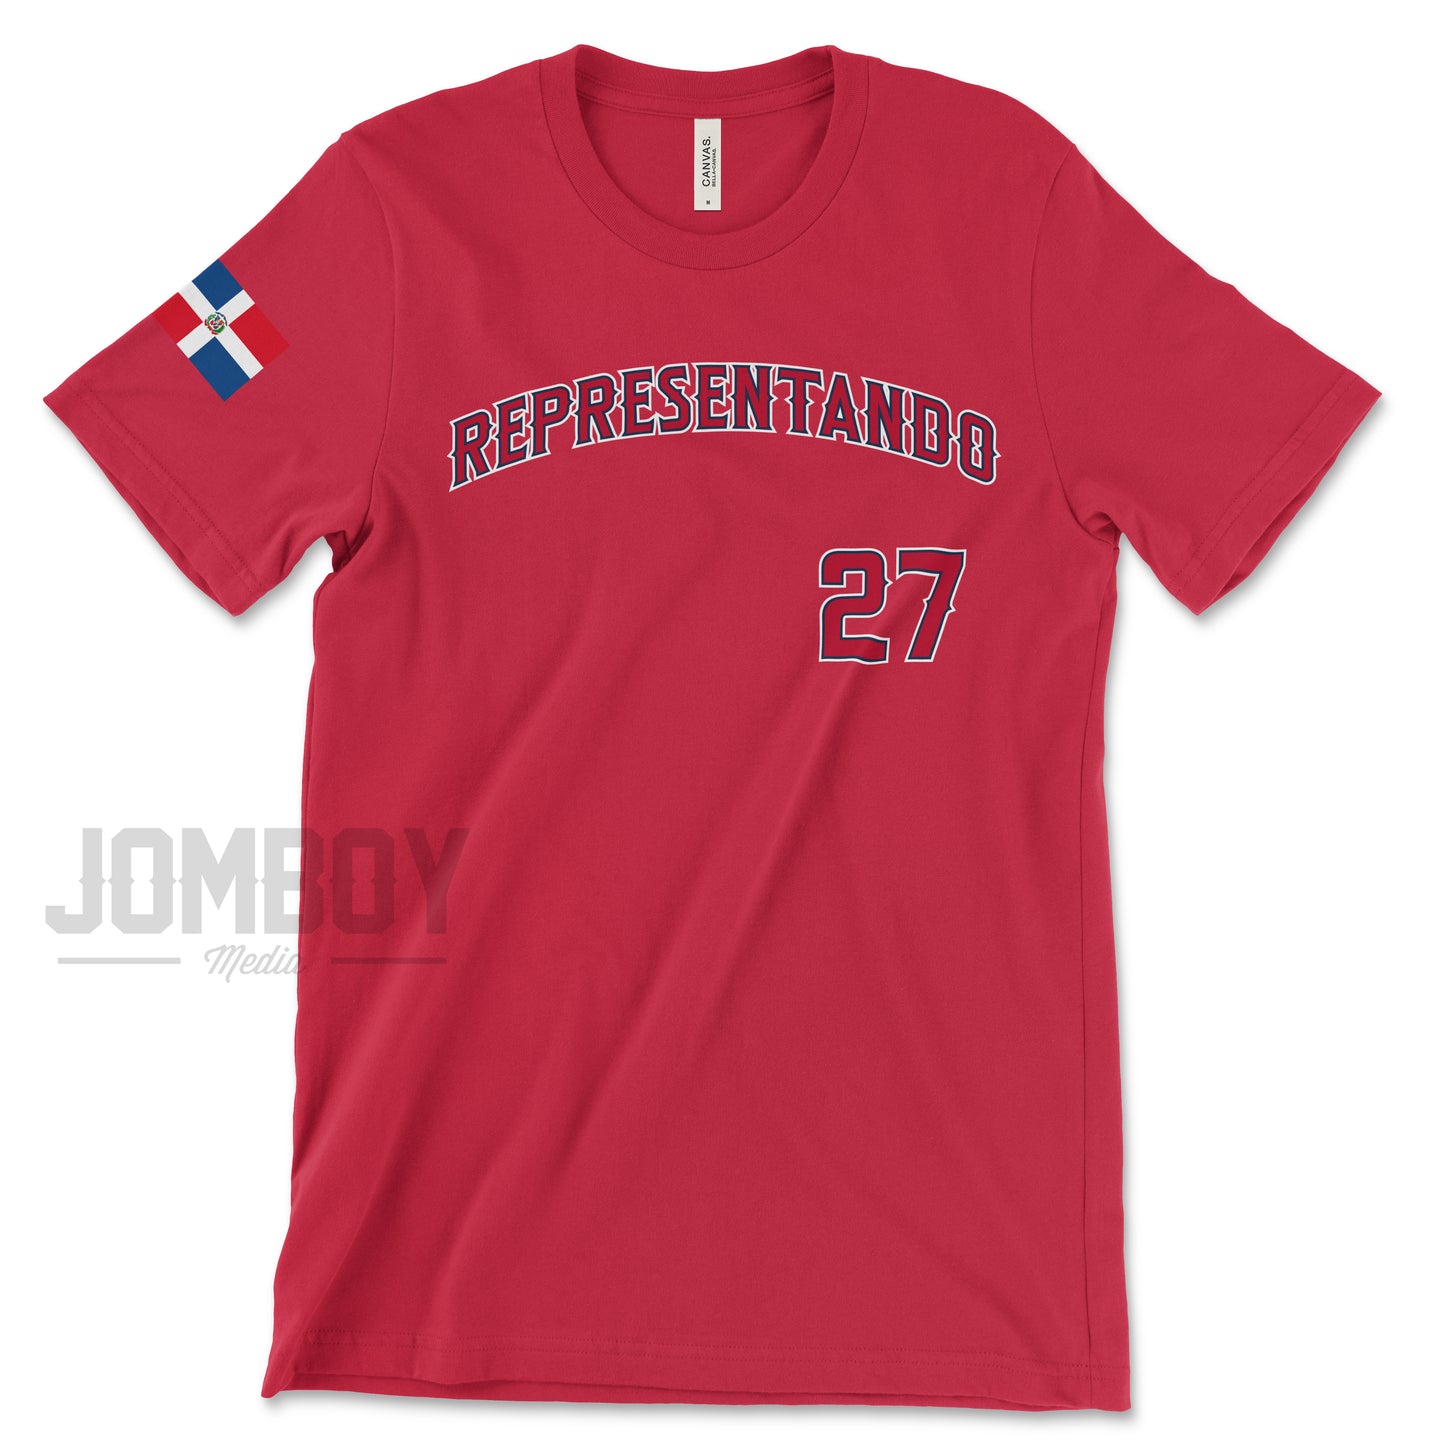 Representando 27 | Dominican Republic | T-Shirt